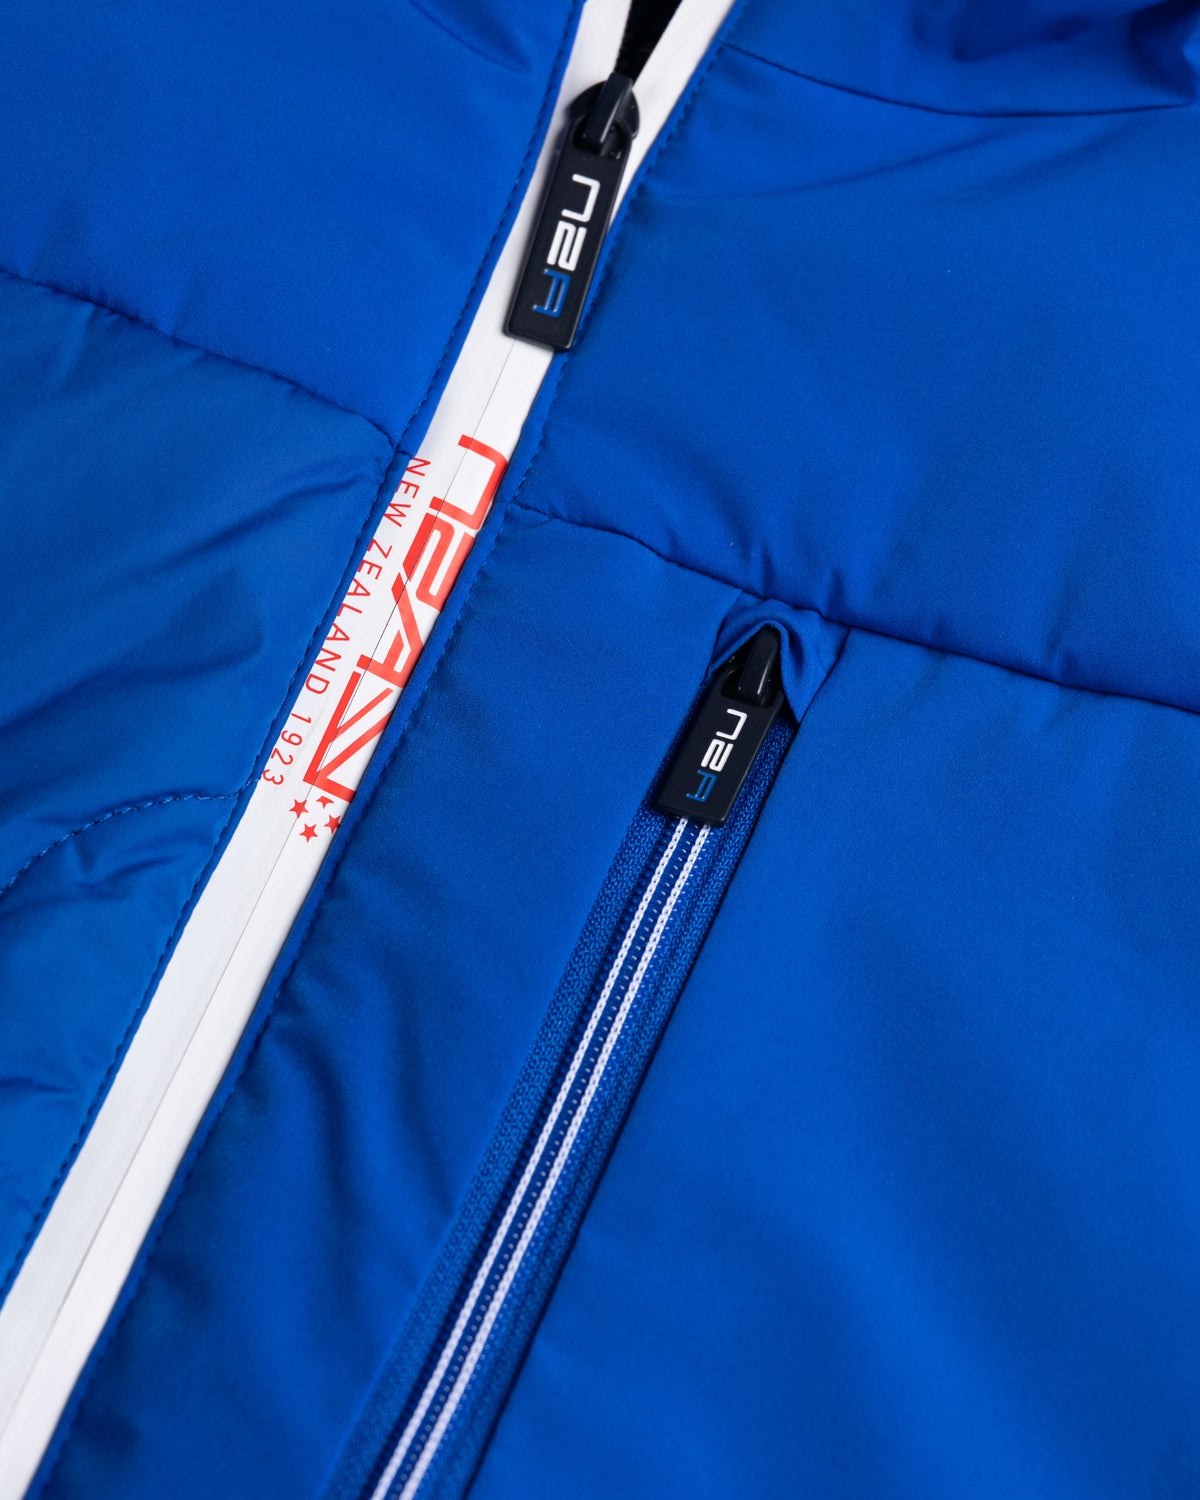 Technical snow jacket Lower Birch - Blizzard Blue